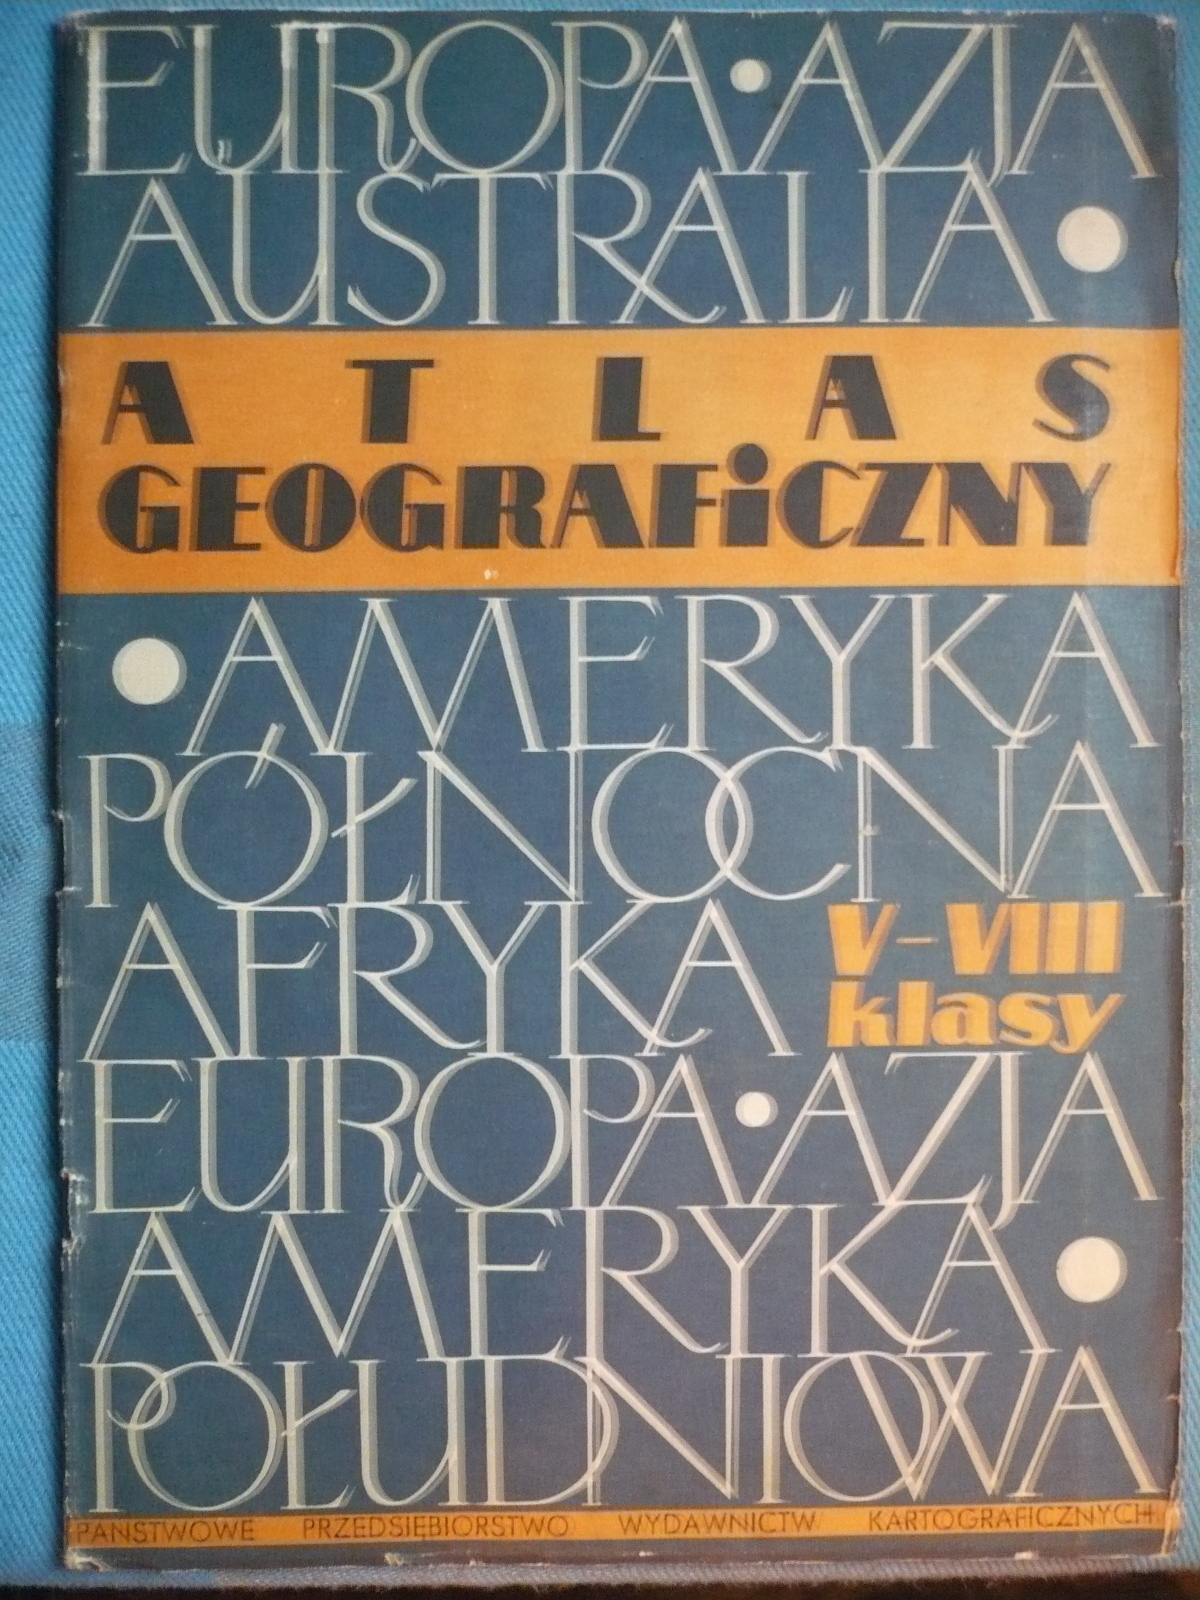 Atlas geograficzny Kl. V-VIII (1